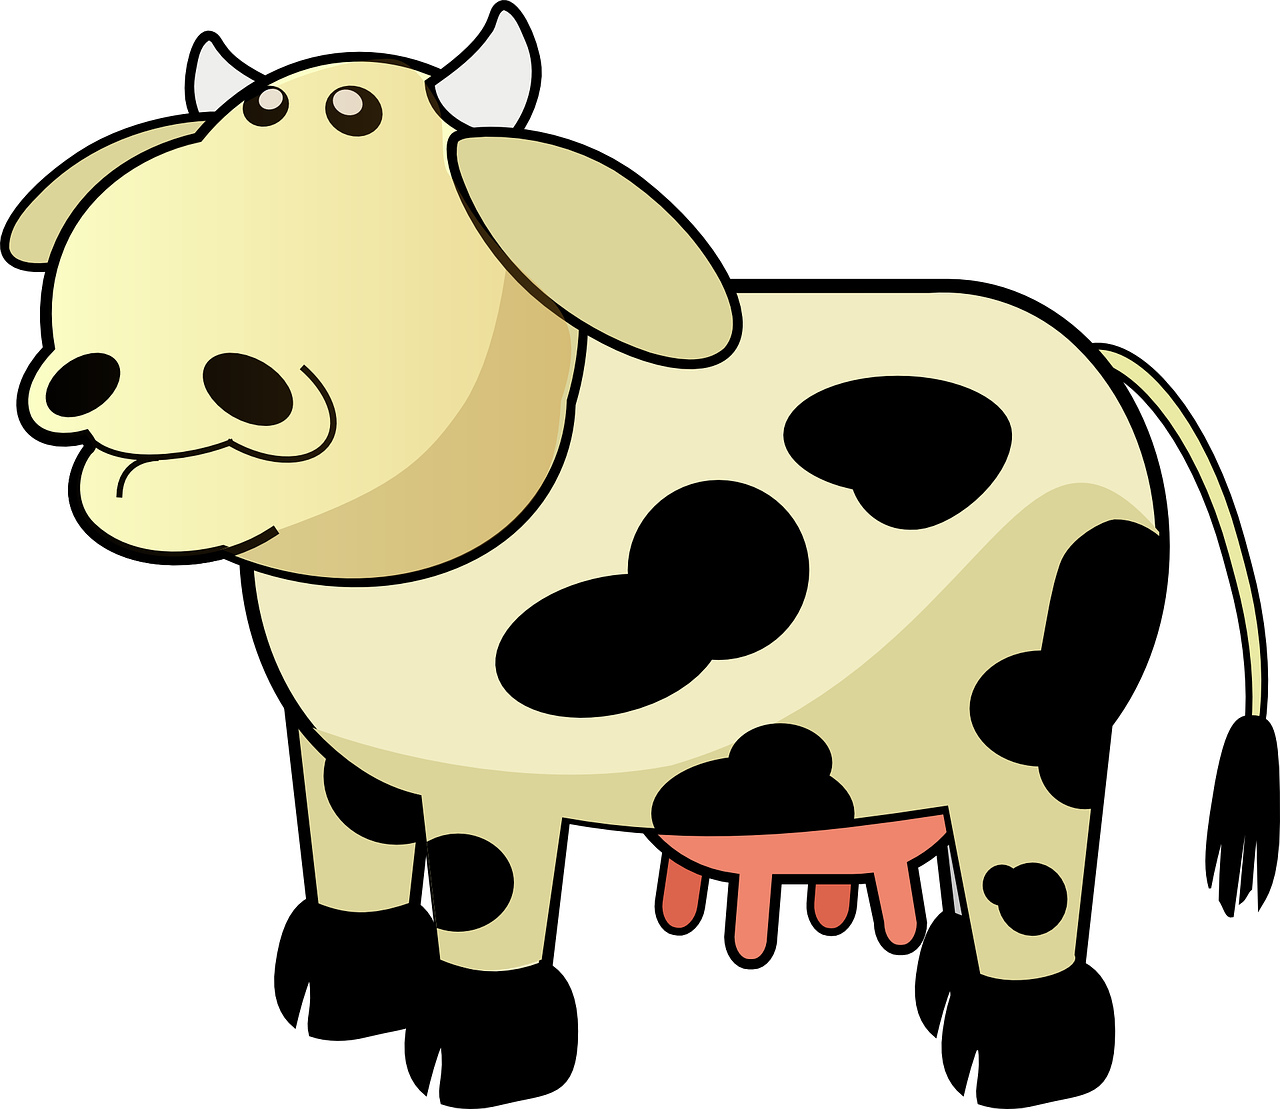 cow cattle livestock free photo